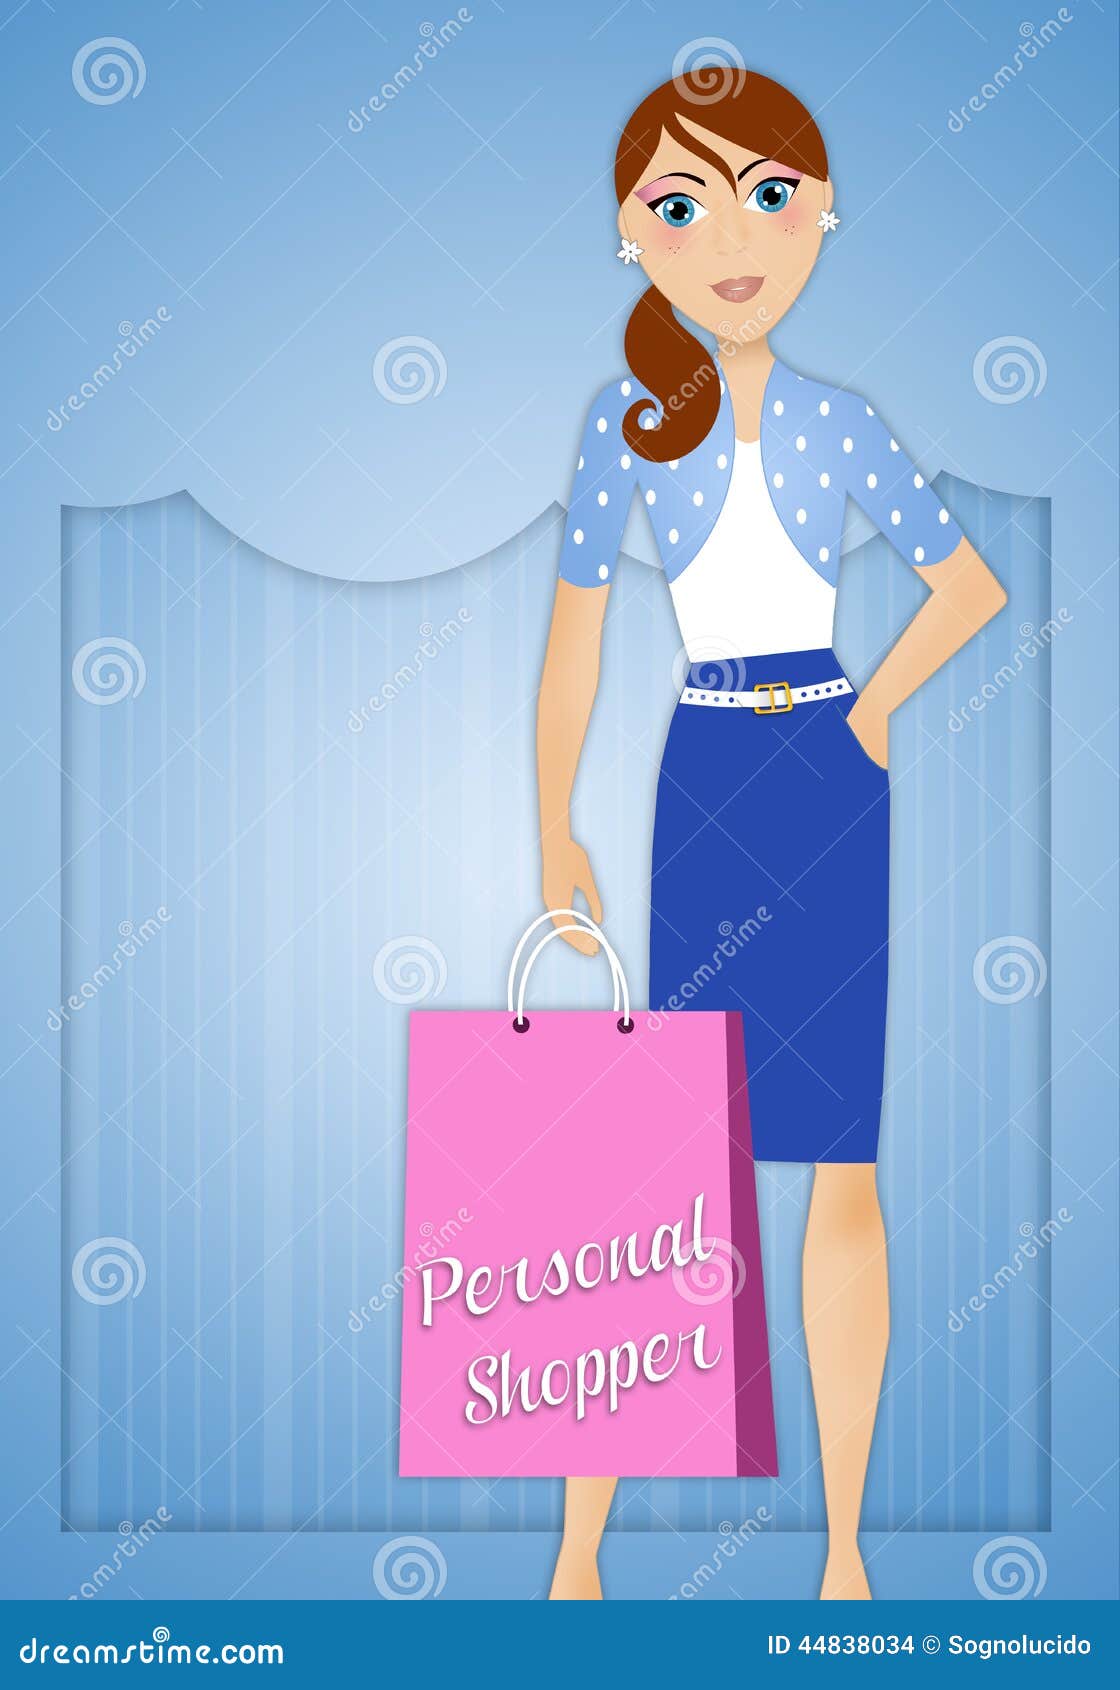 personal shopper cartoon